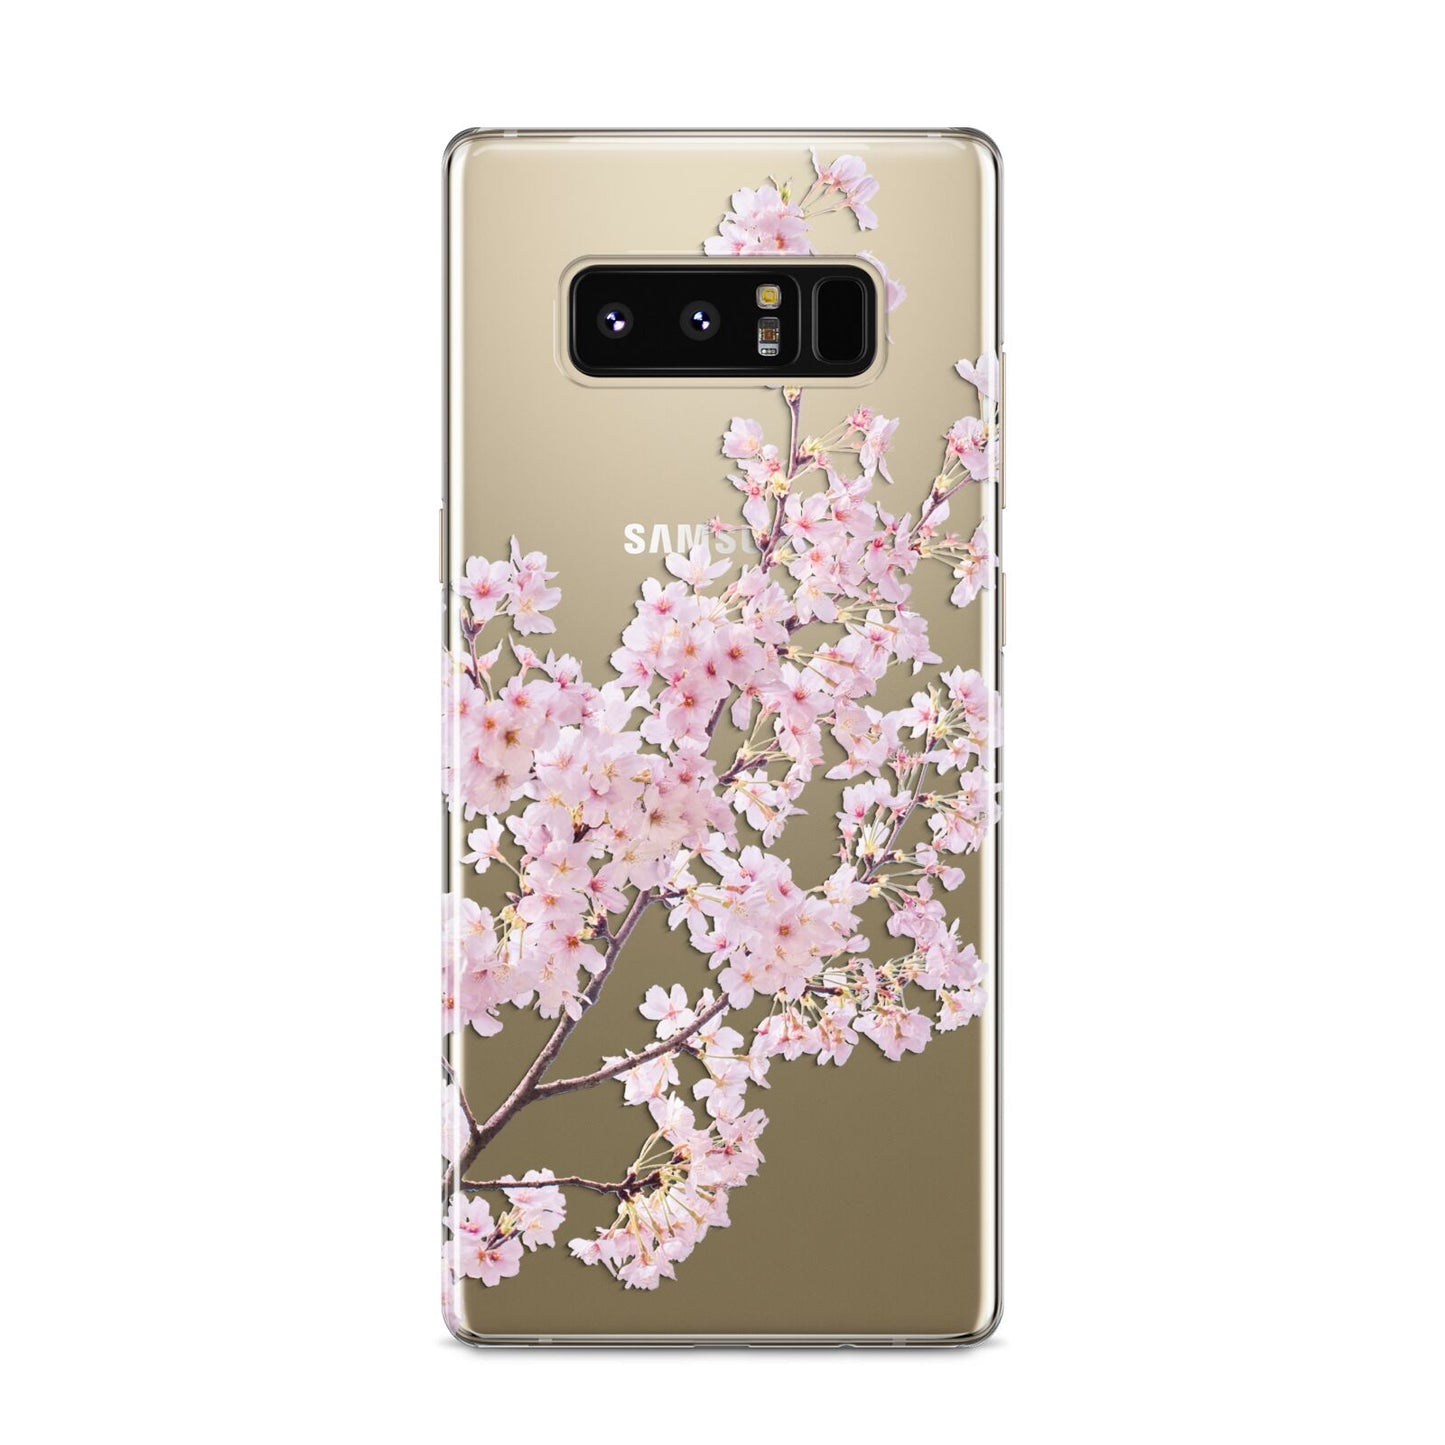 Blossom Tree Samsung Galaxy S8 Case